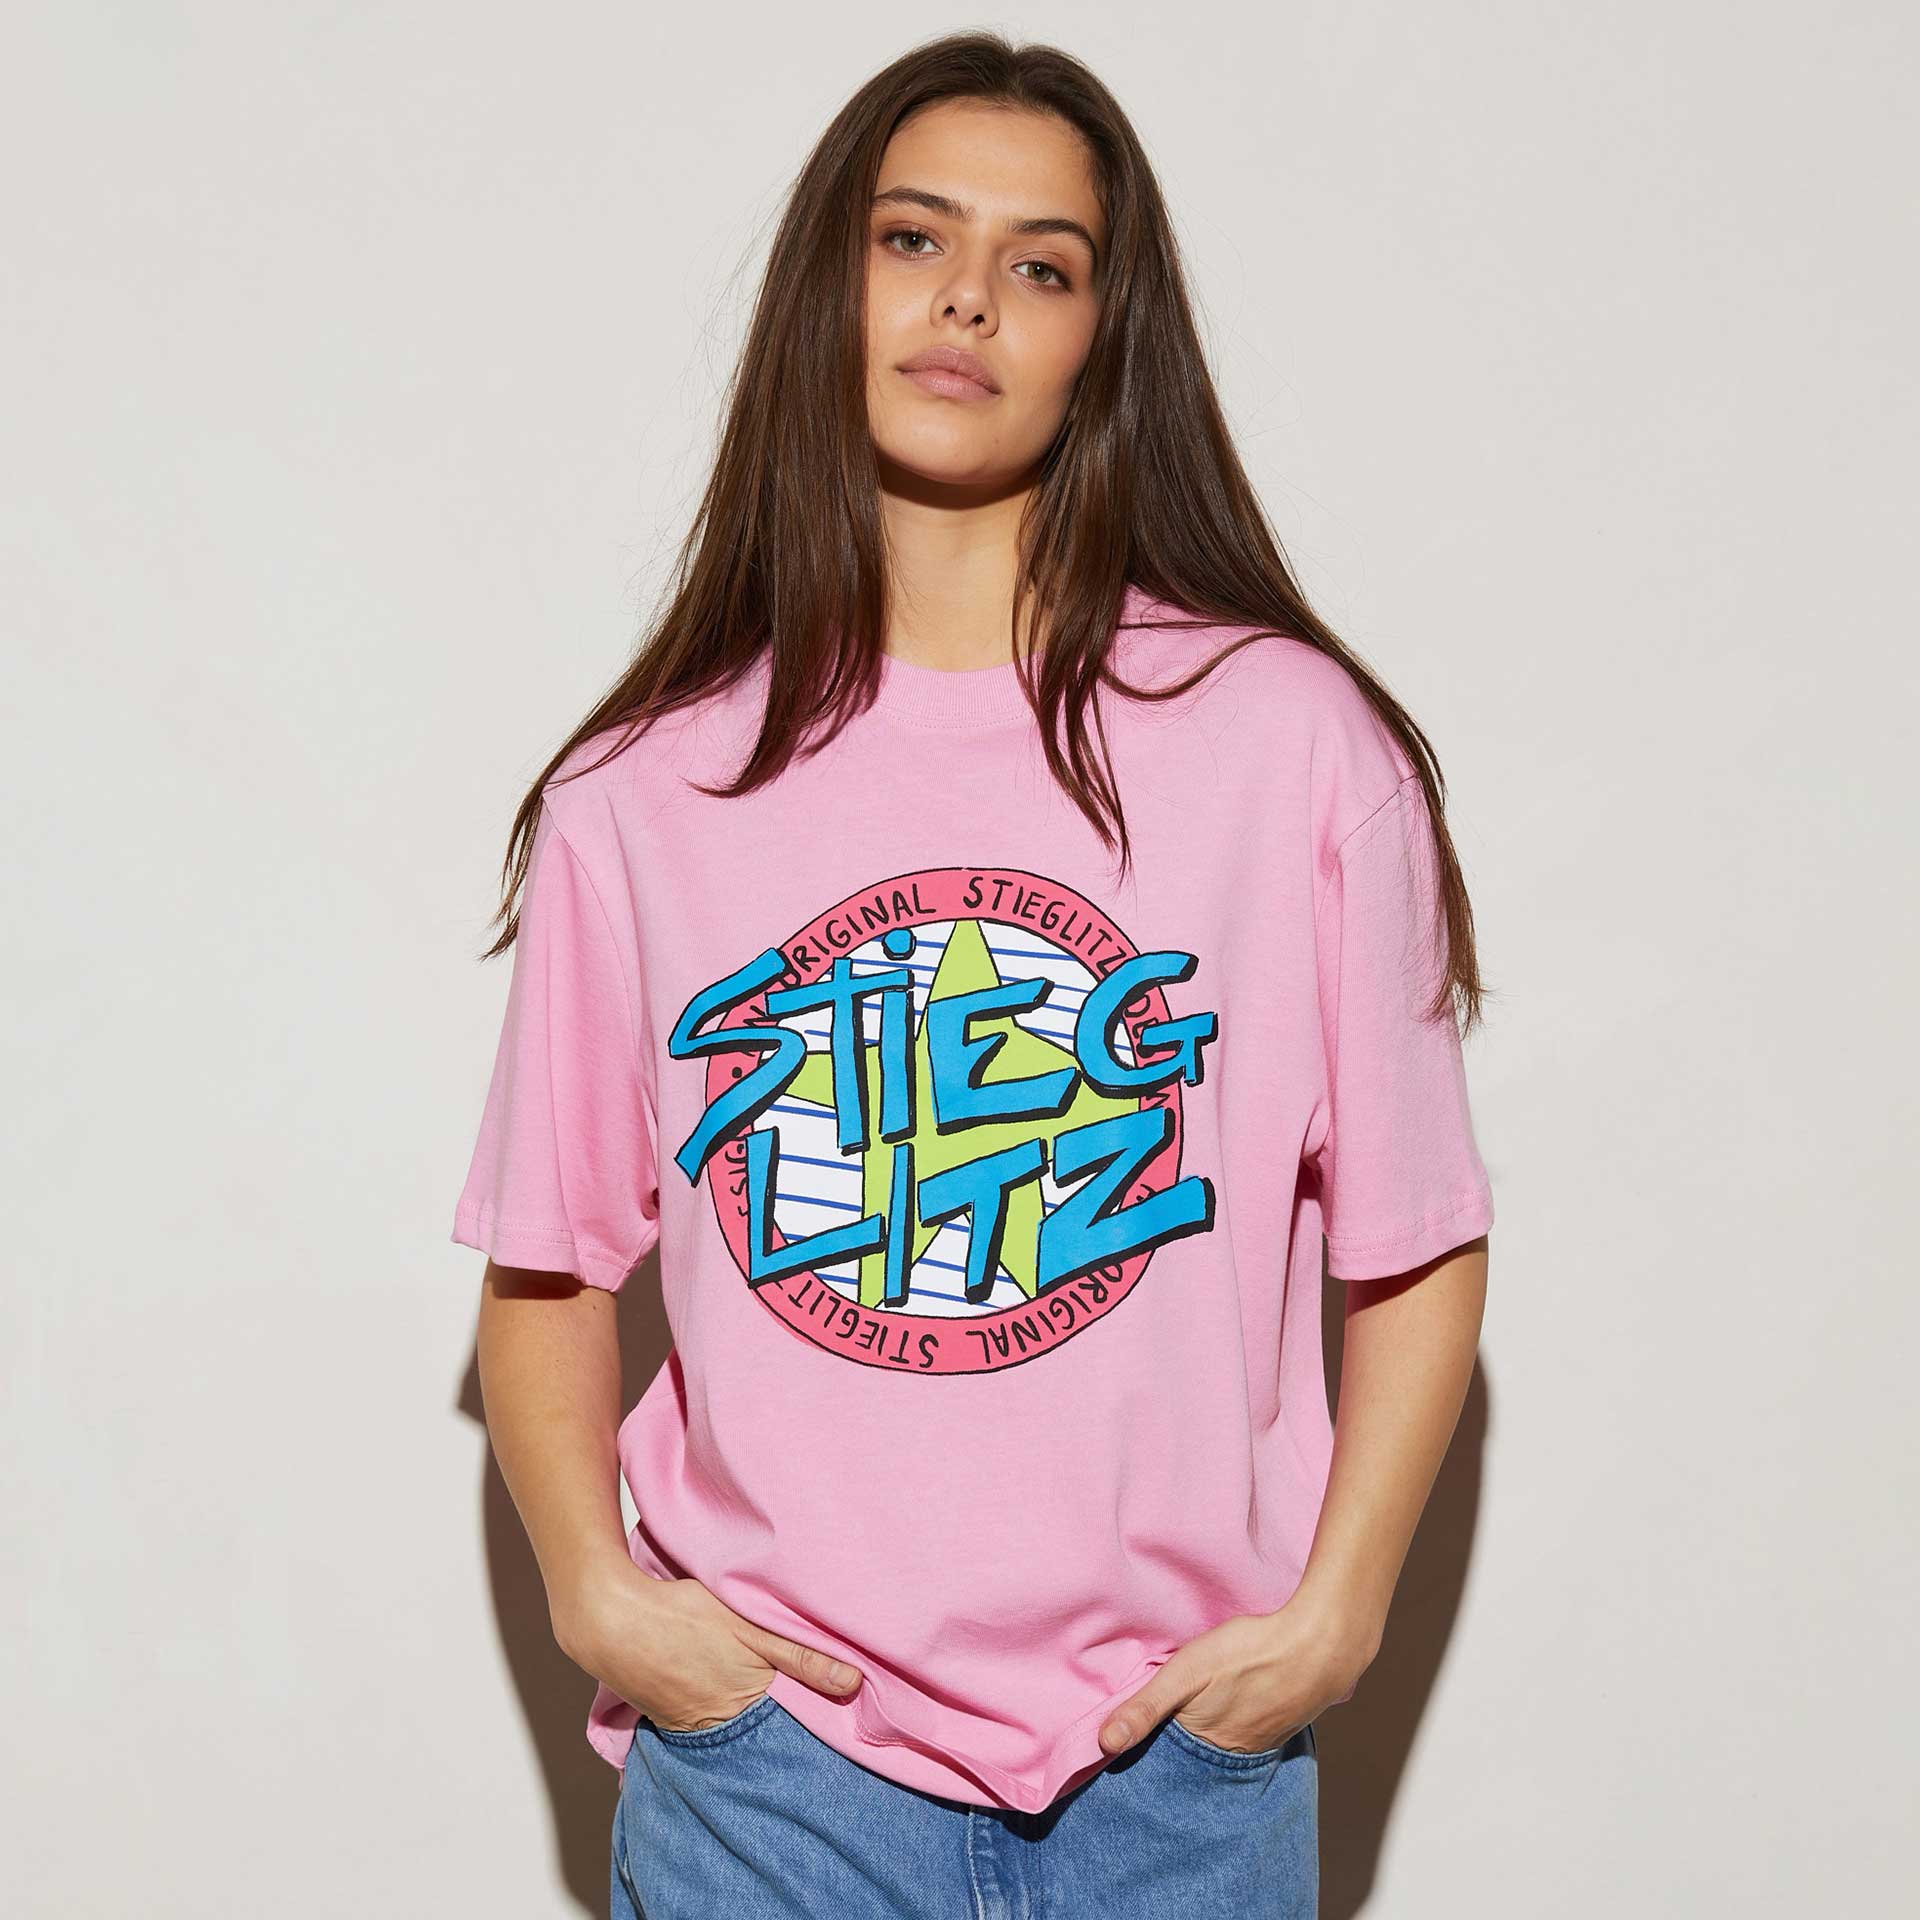 Stieglitz T-shirt Chica oversized 1